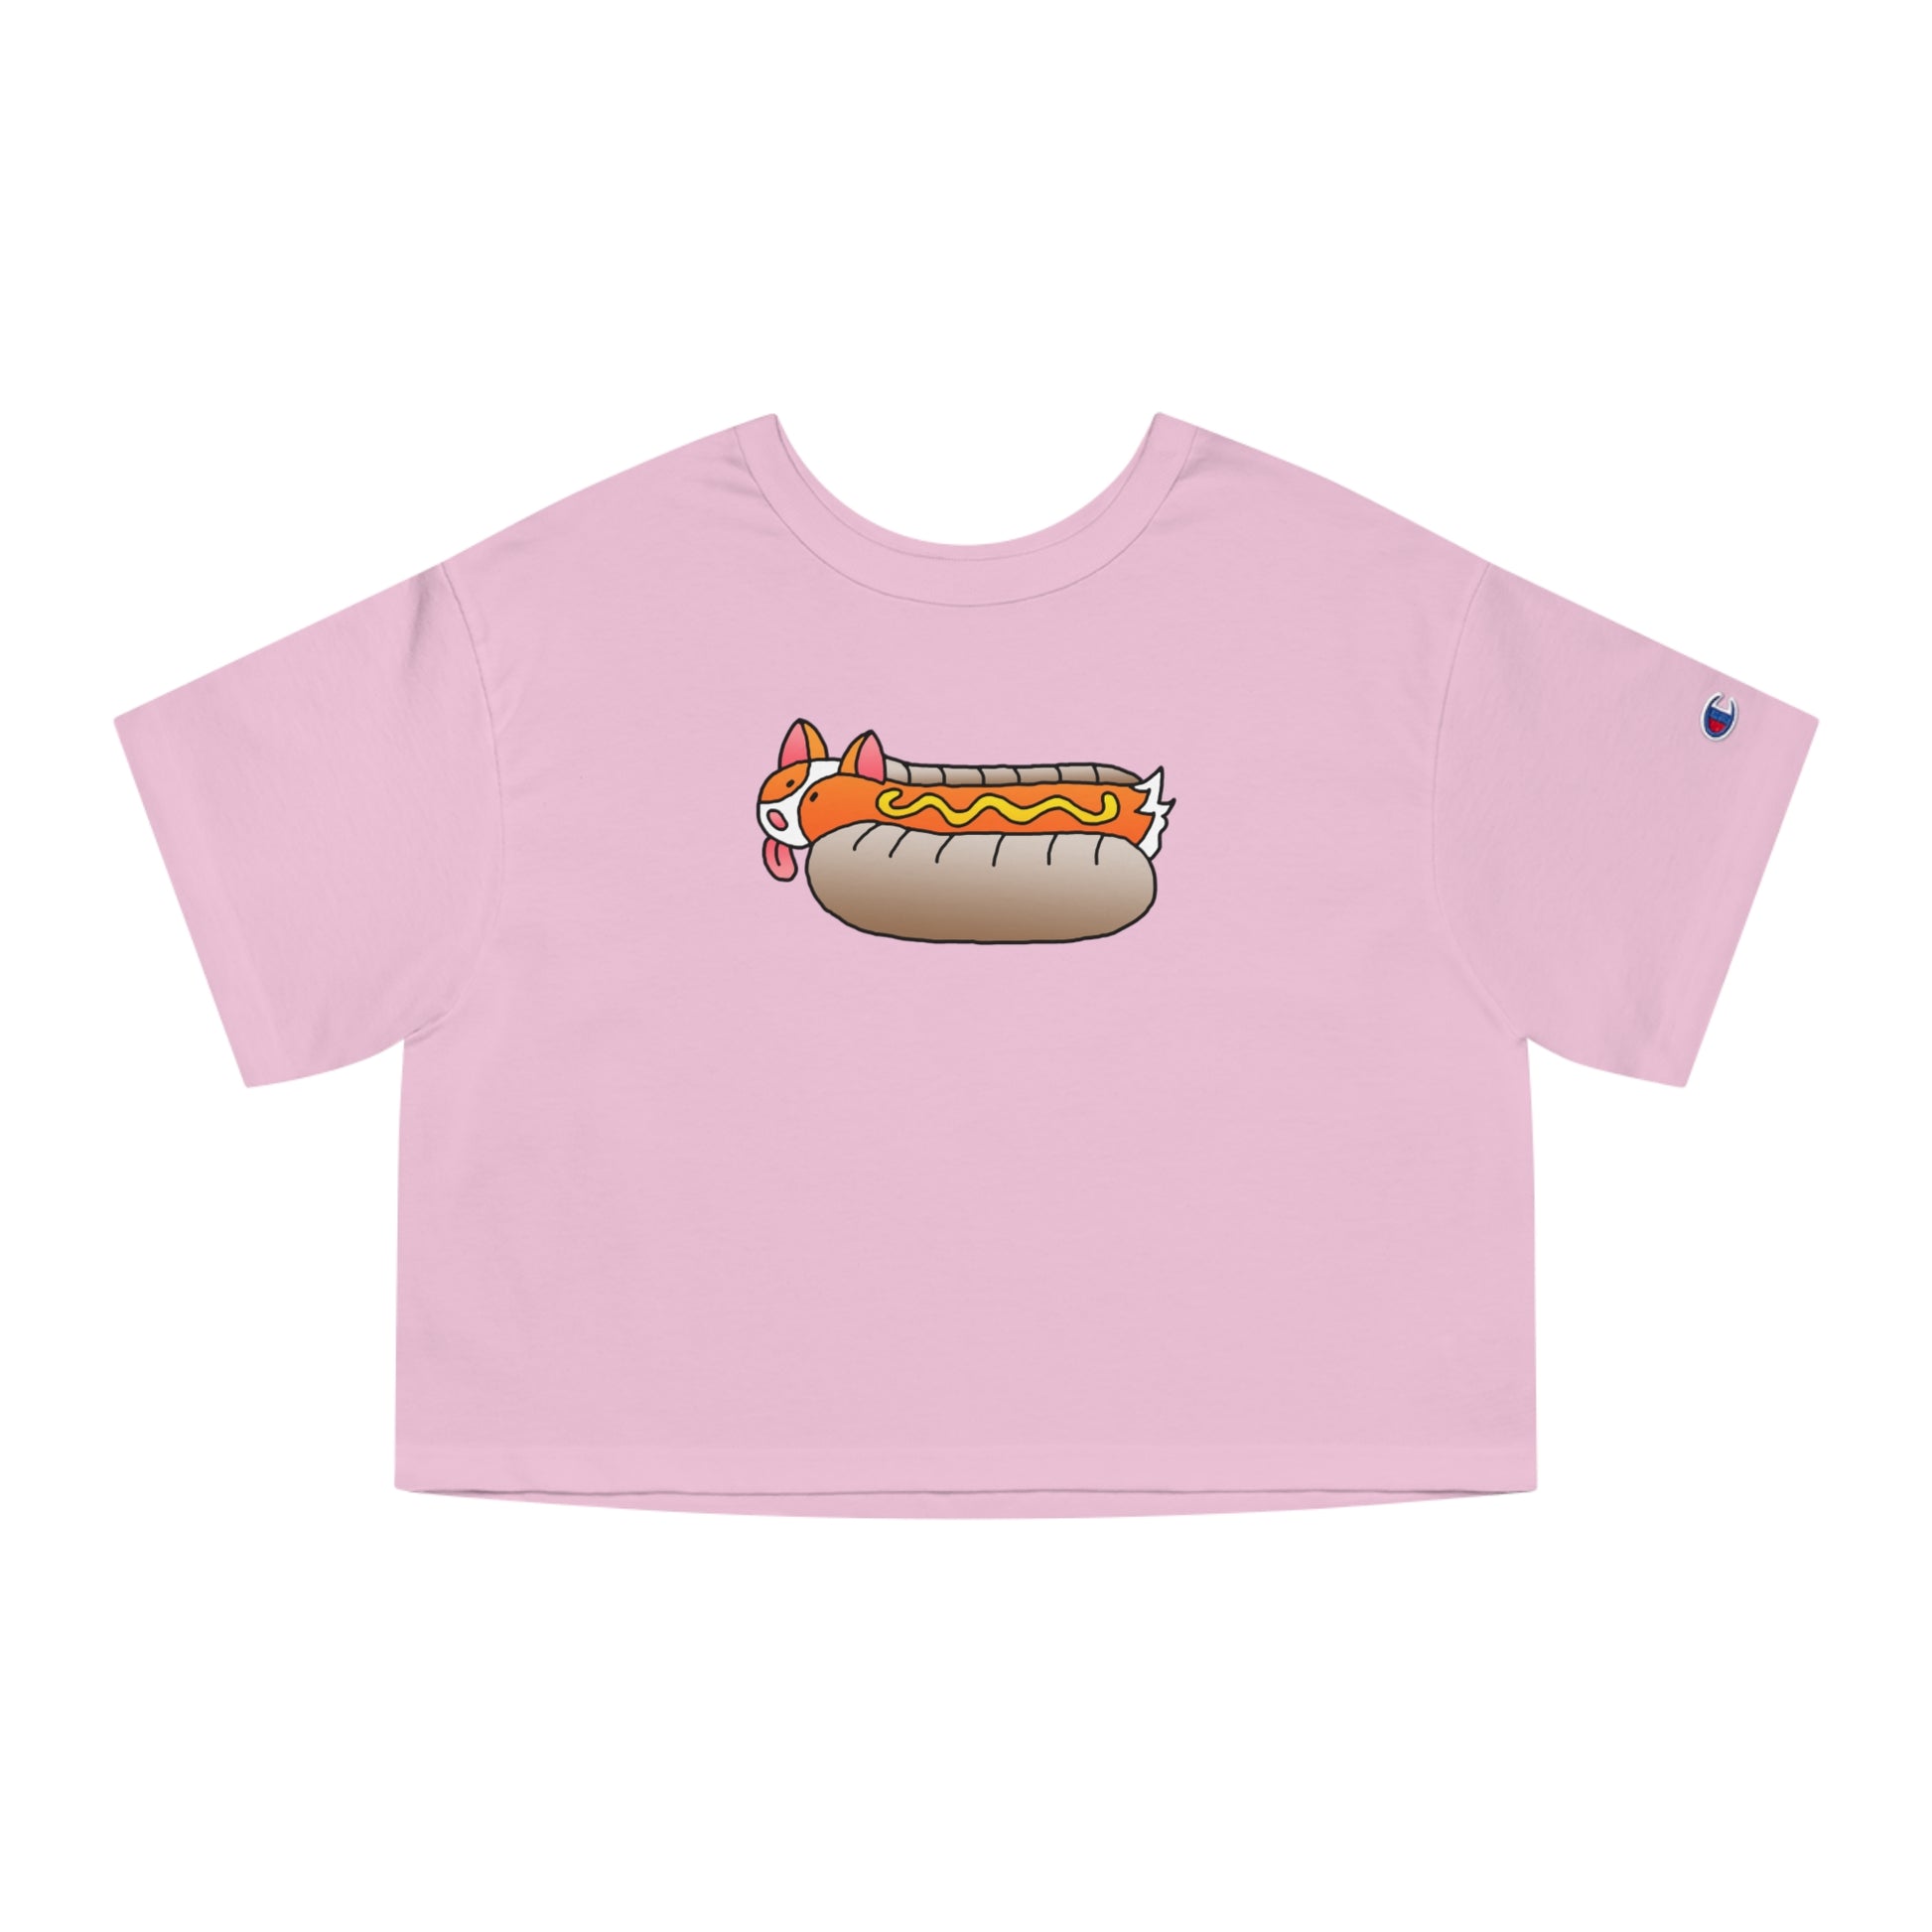 Pink Front ShoBeaRo logo women's cropped t-shirt corgi hot dog I saved a life short sleeve Champion shirt